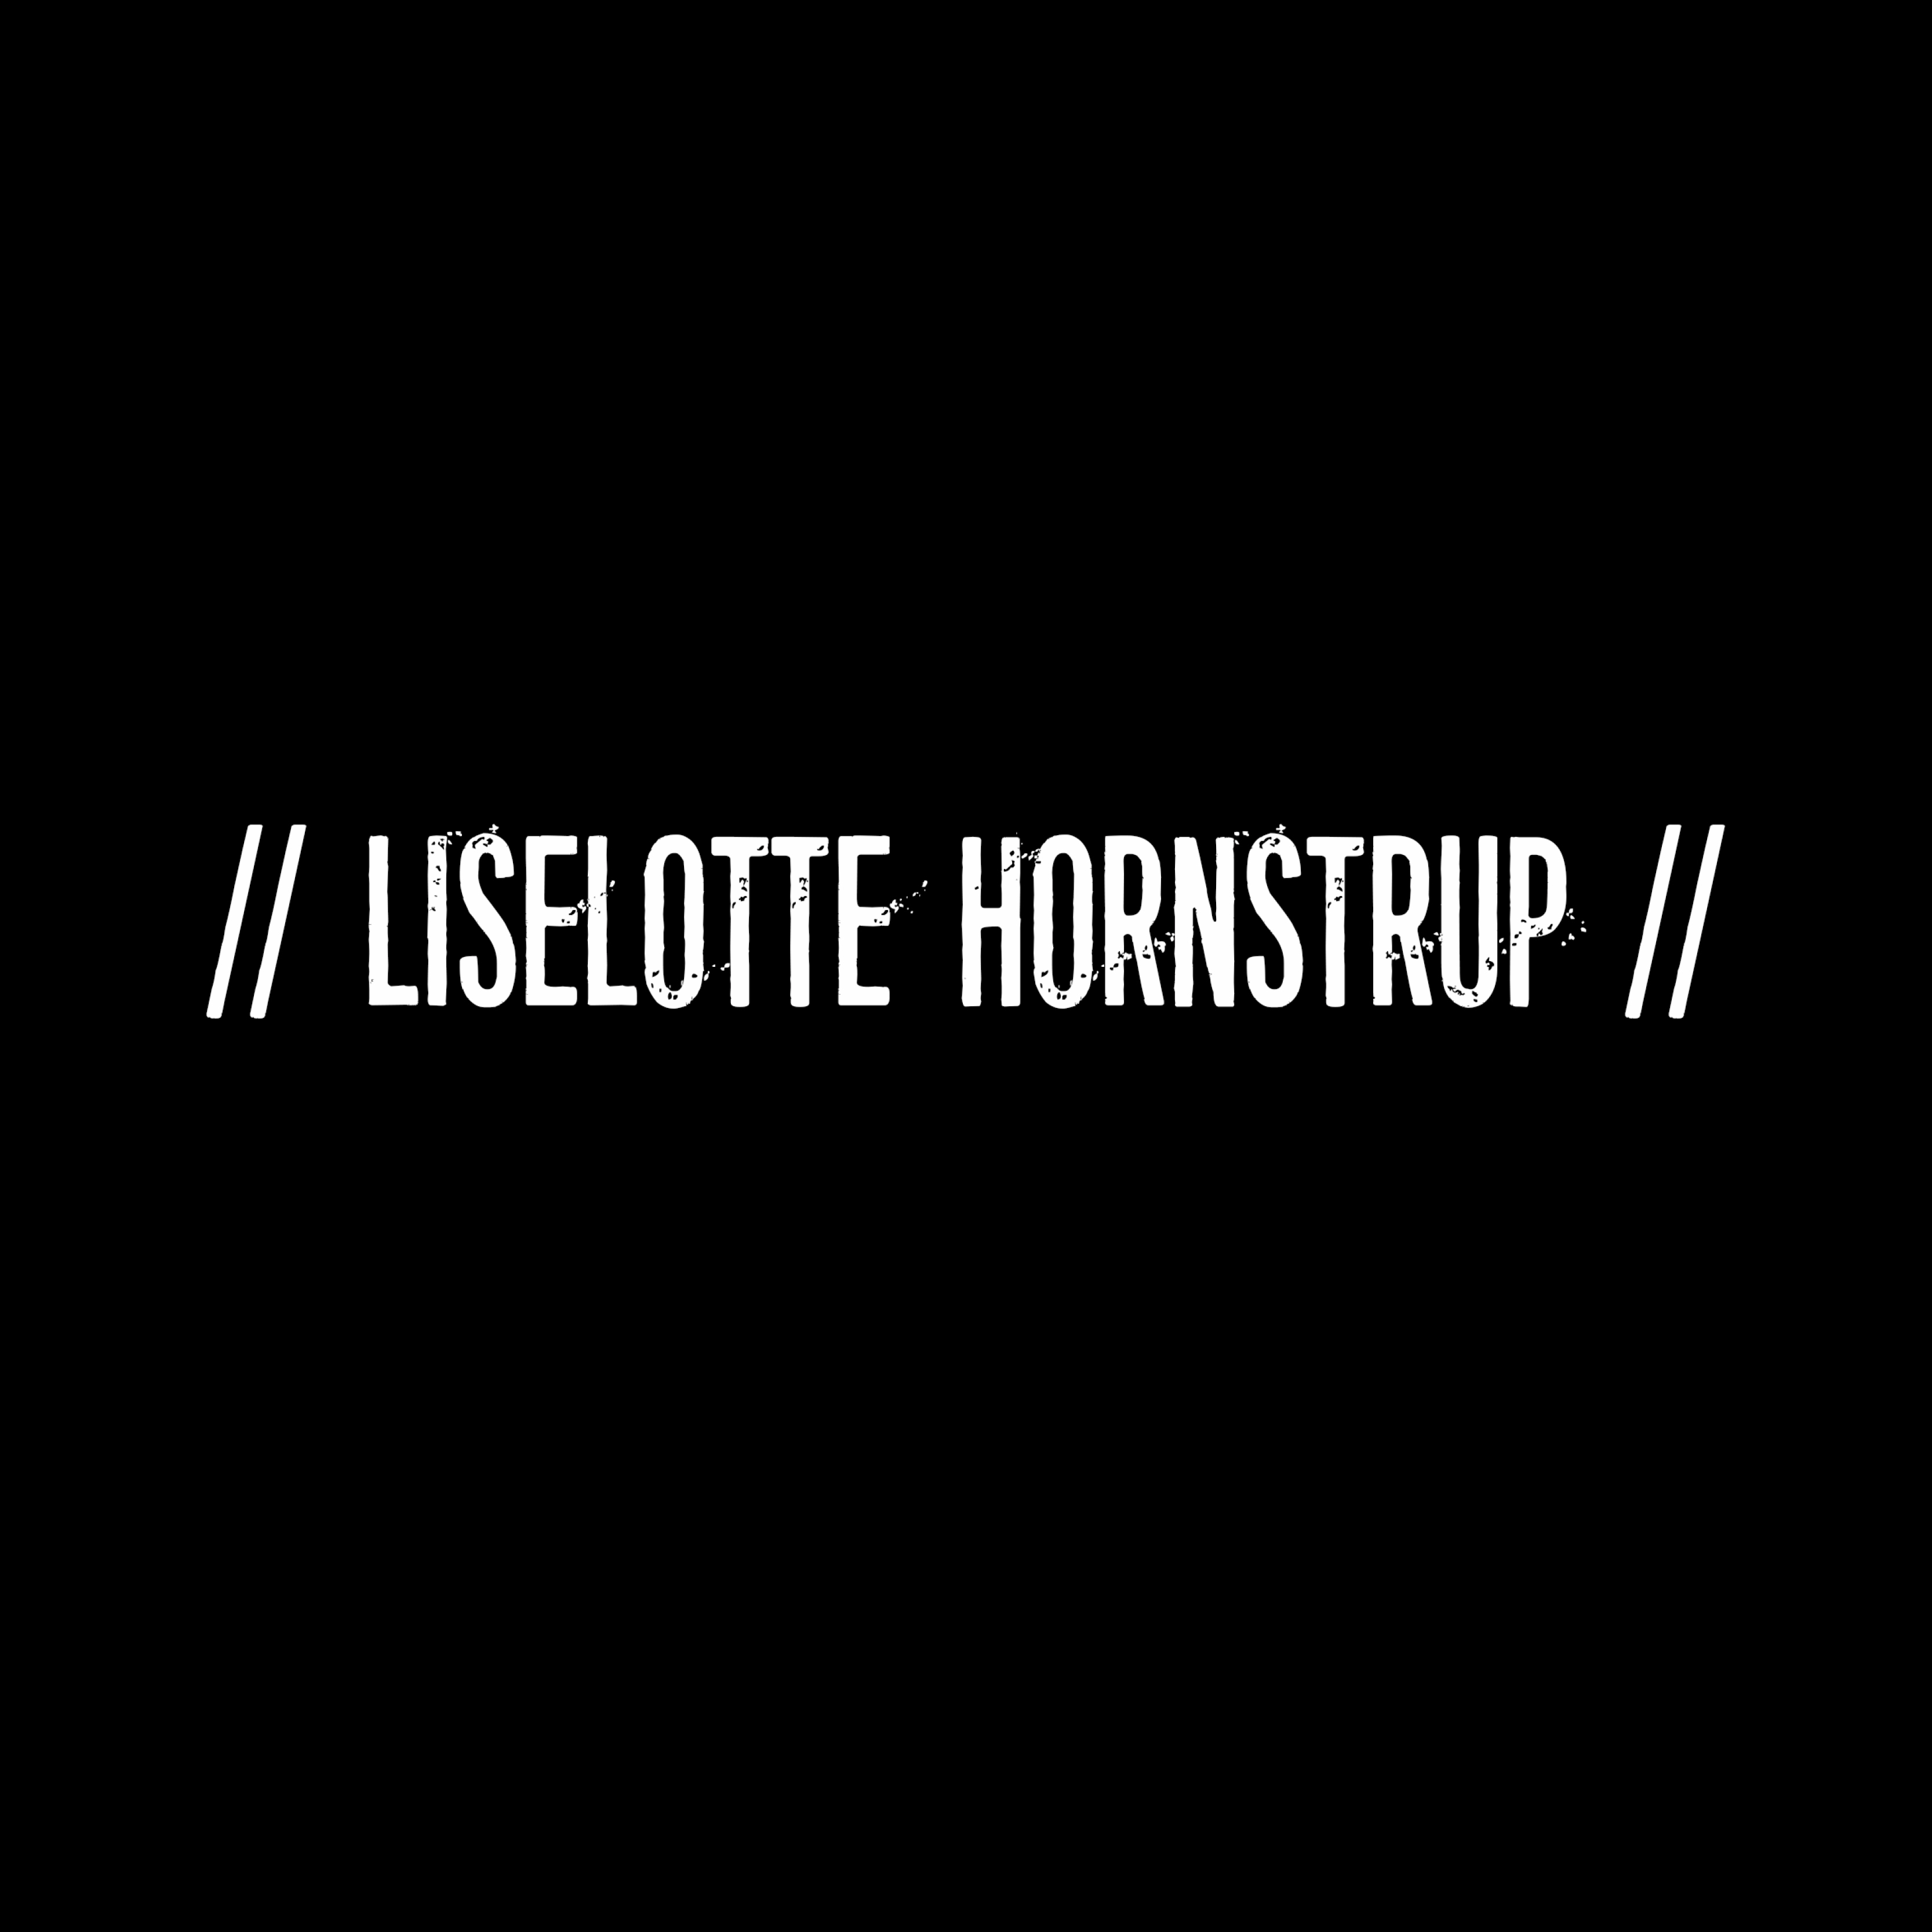 Liselotte Hornstrup